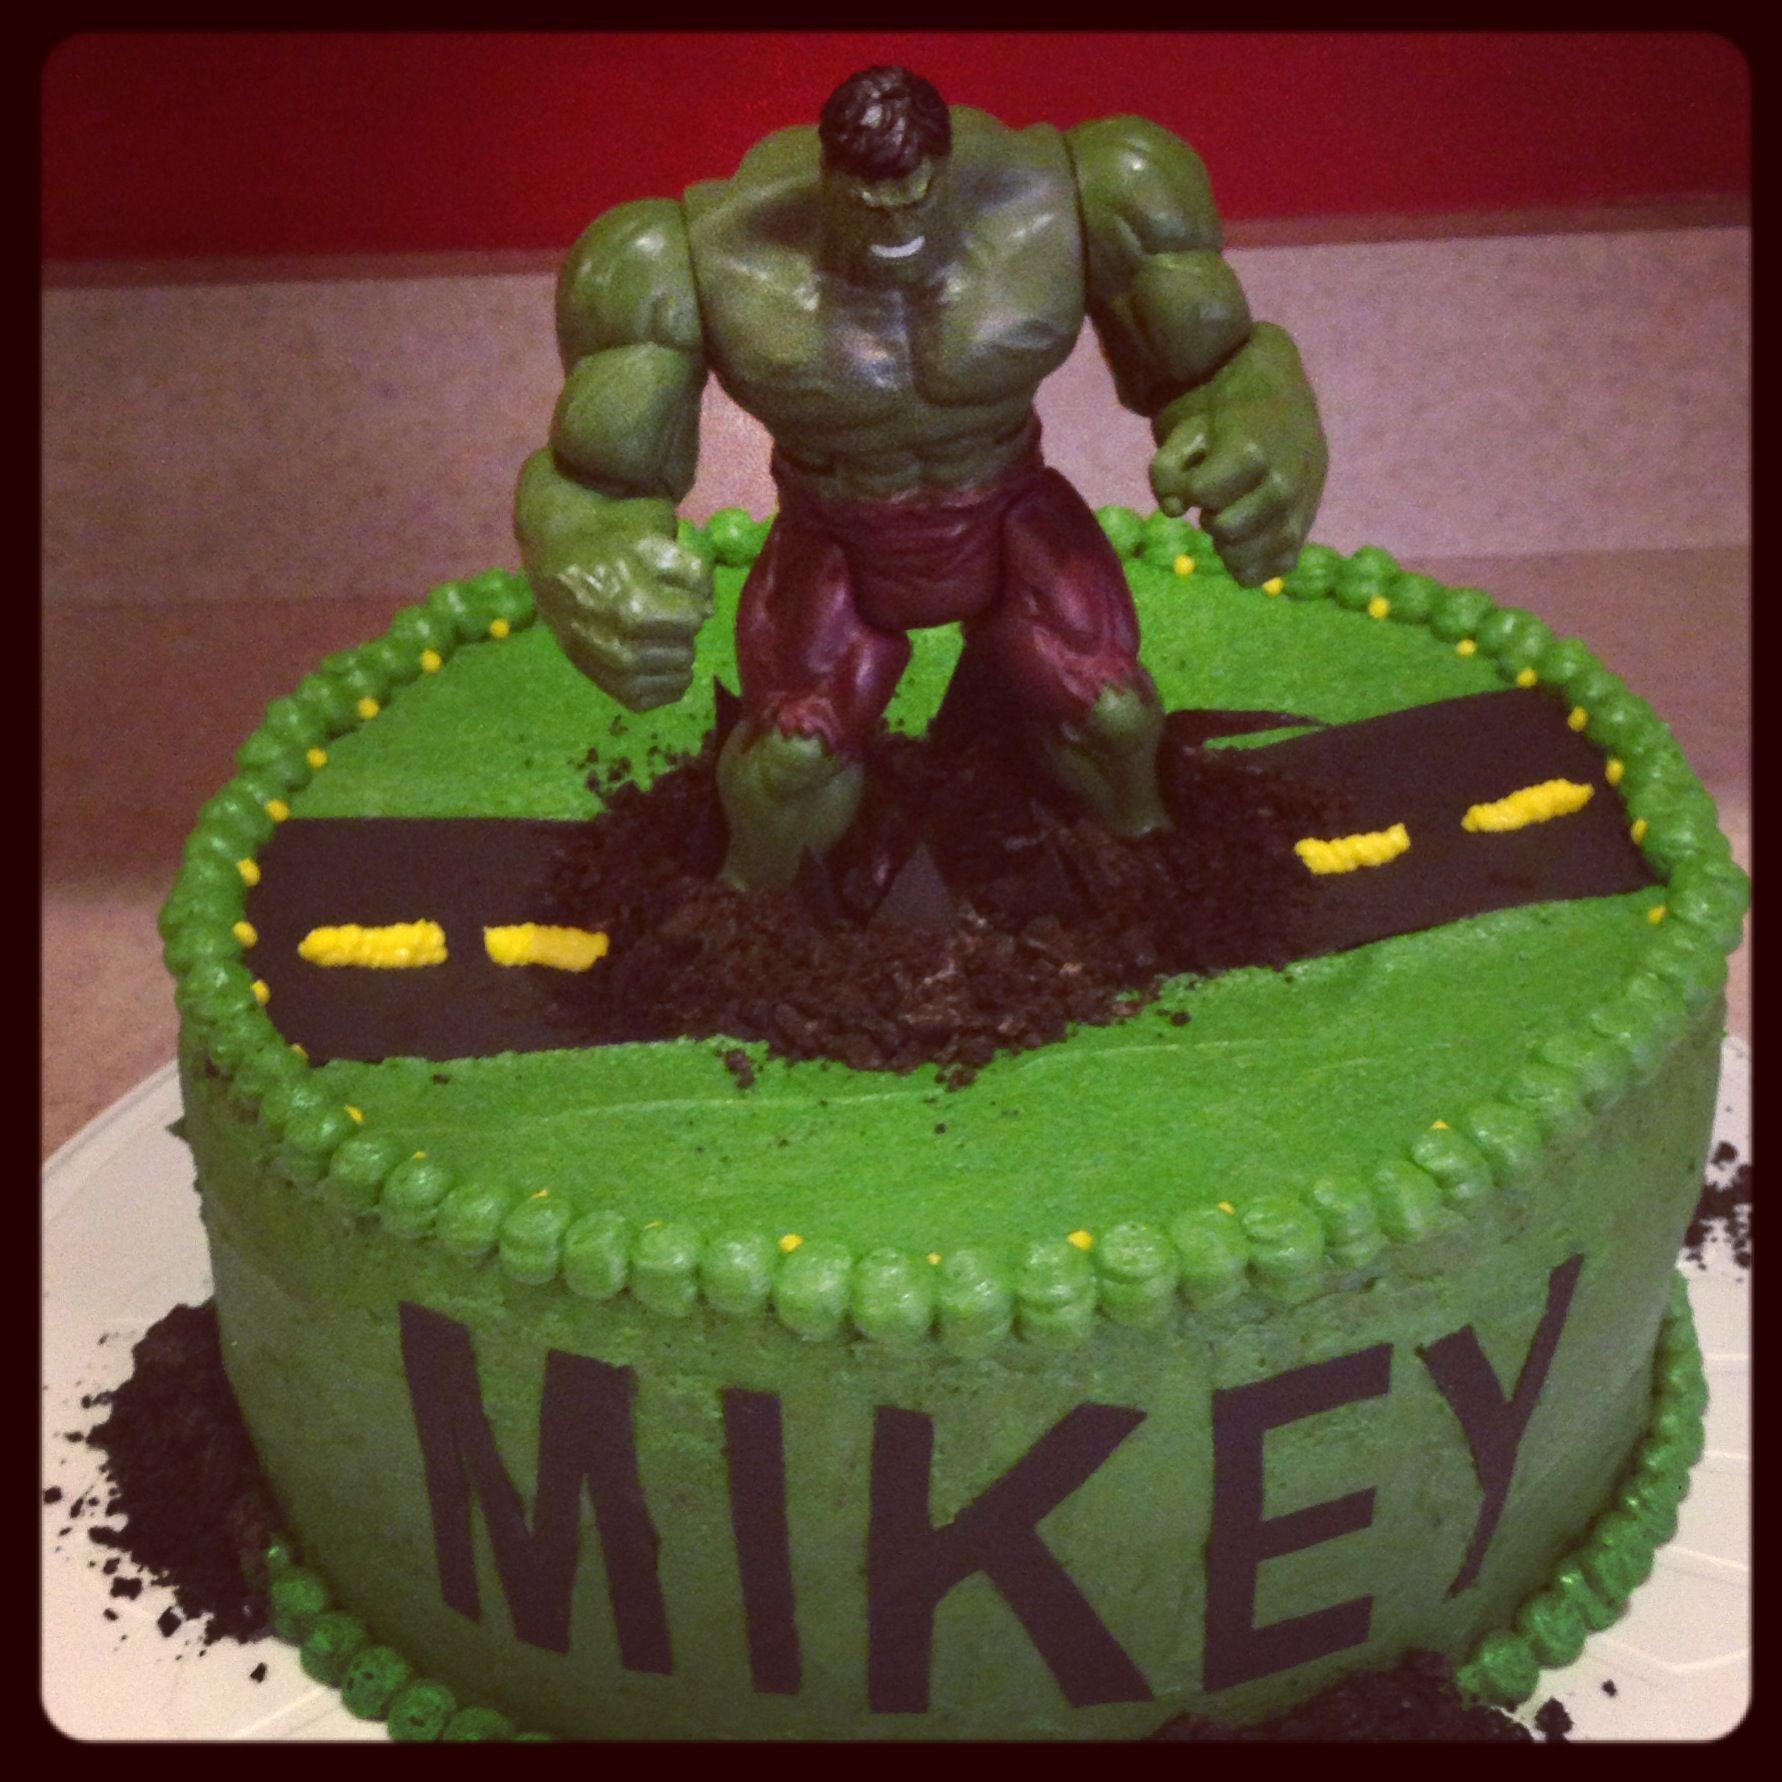 Best ideas about Hulk Birthday Cake
. Save or Pin Hulk cake Cakes Now.